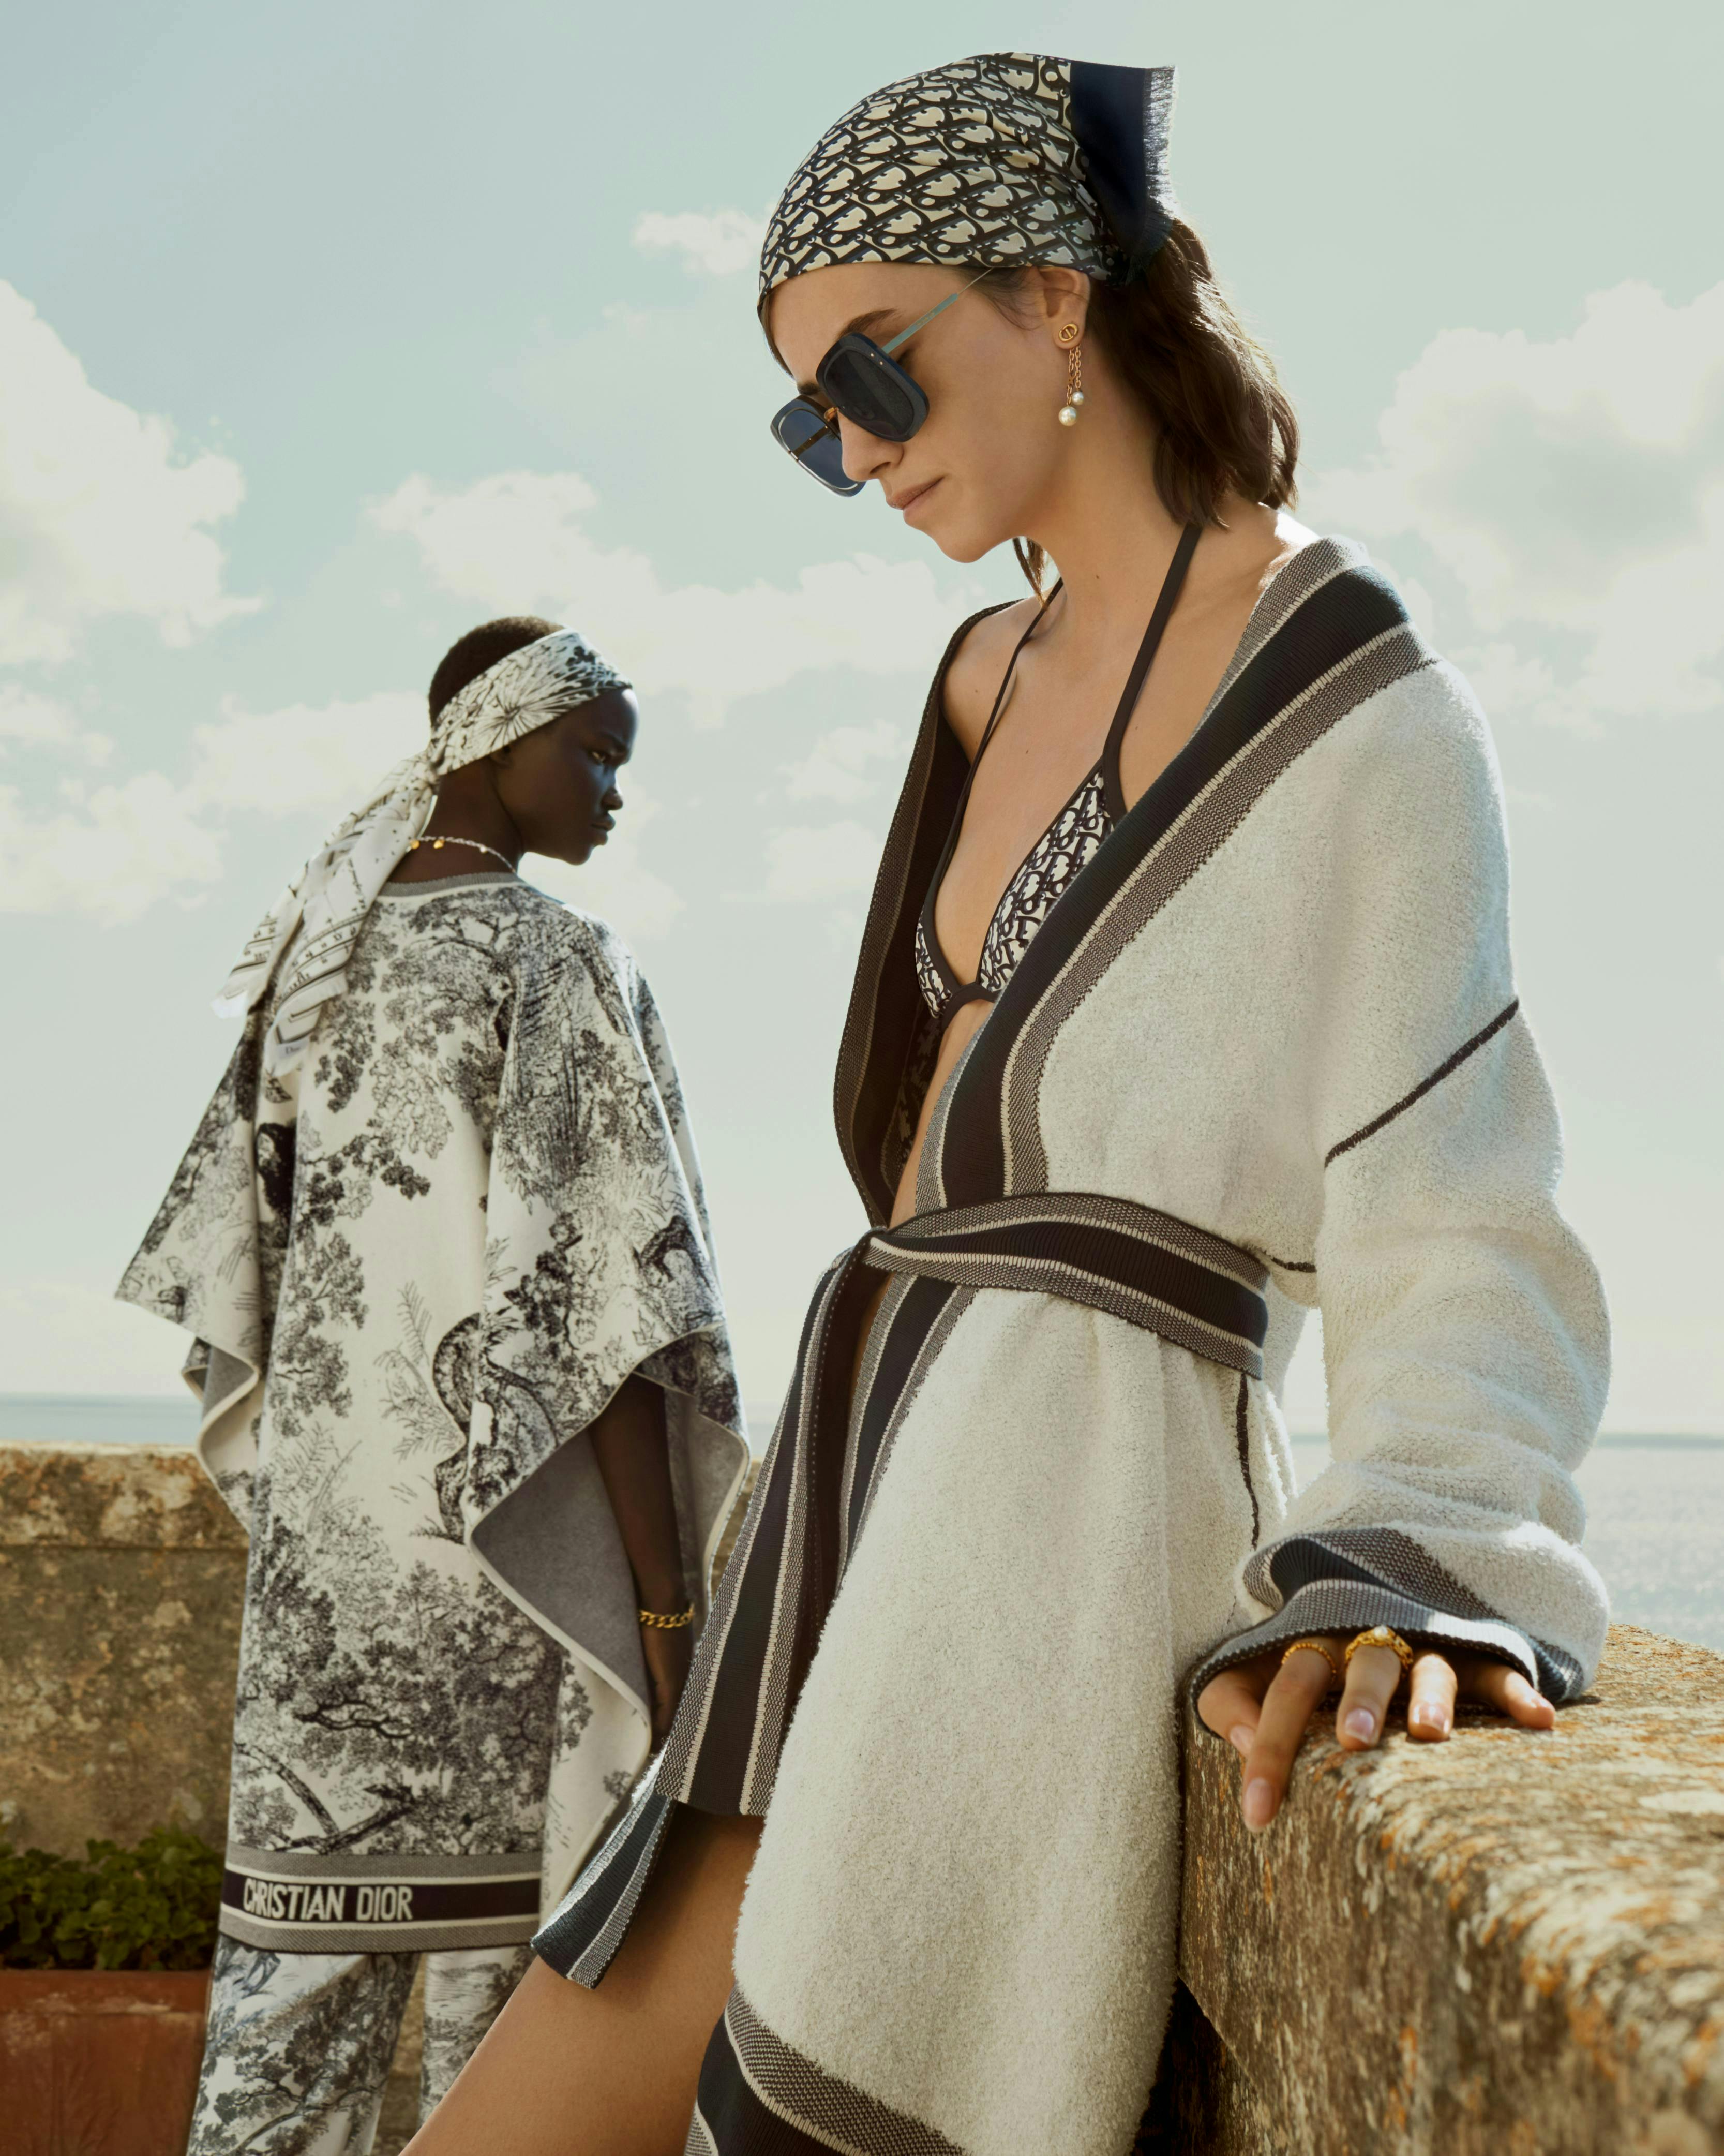 clothing apparel sunglasses accessories accessory robe fashion person human